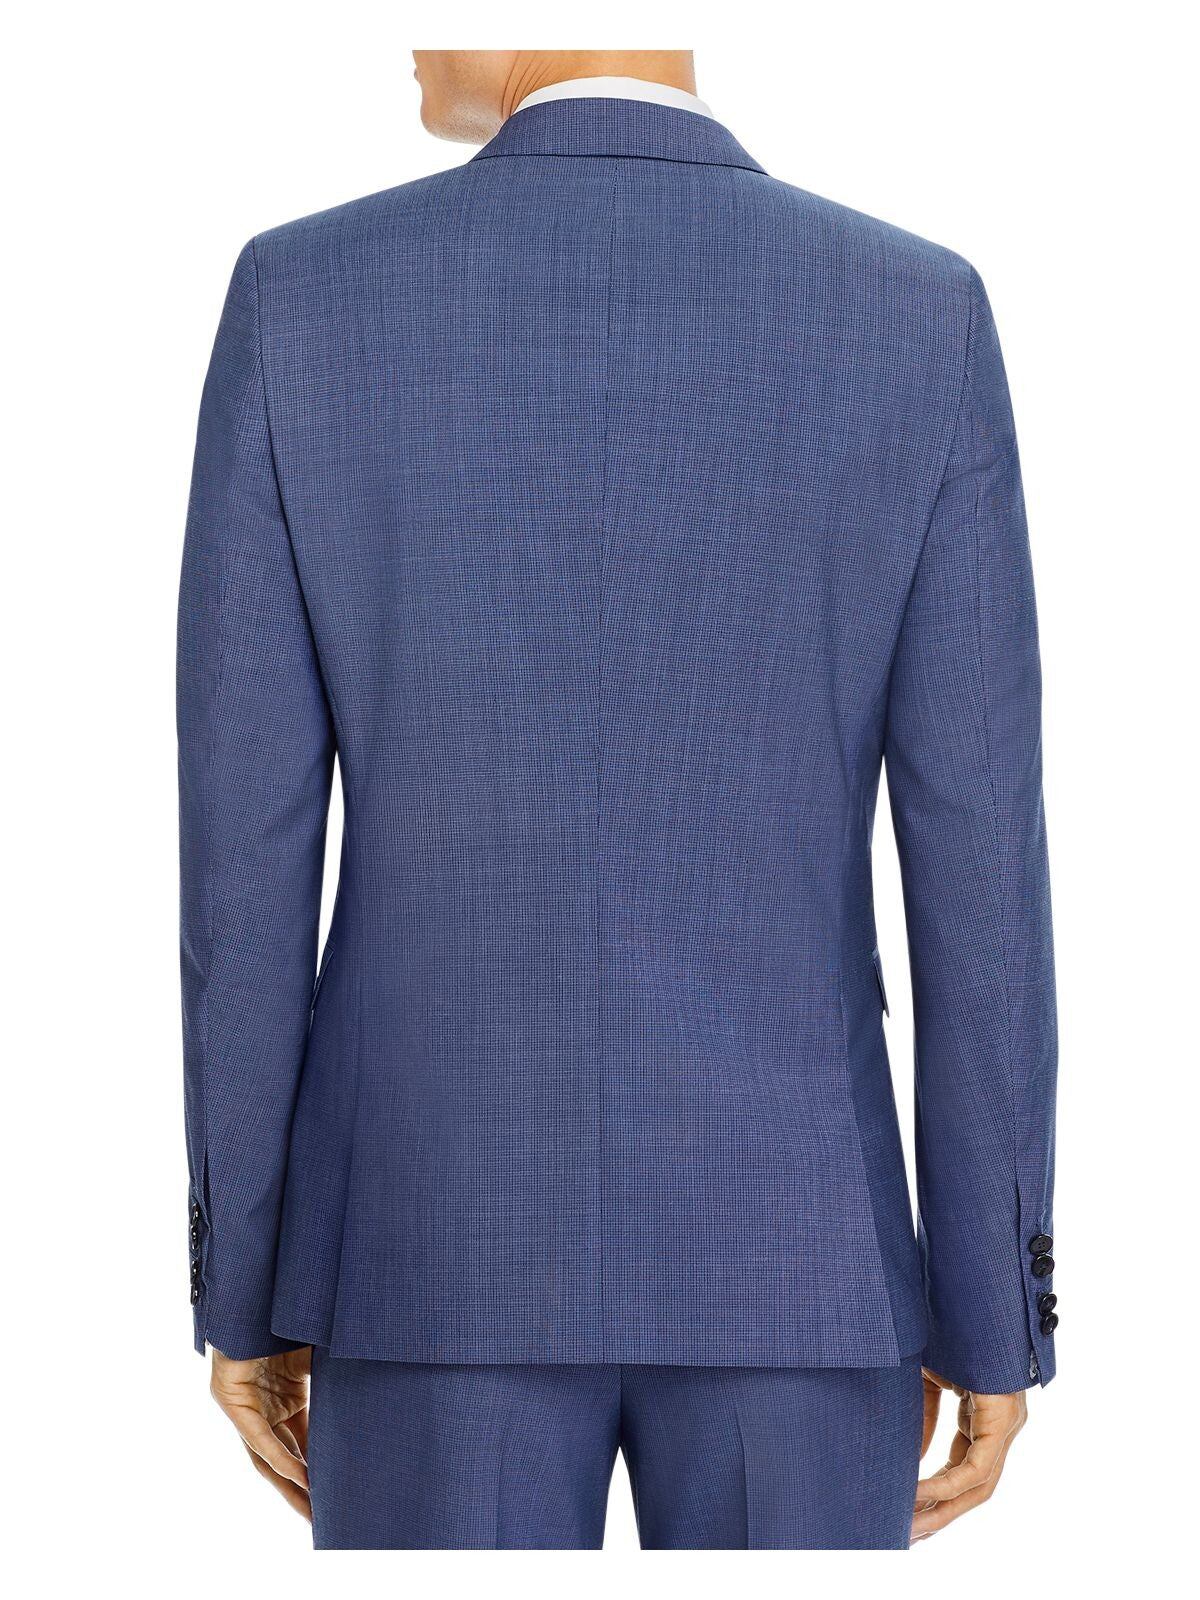 HUGO BOSS Mens Blue Single Breasted, Wool Blend Suit Jacket 44R